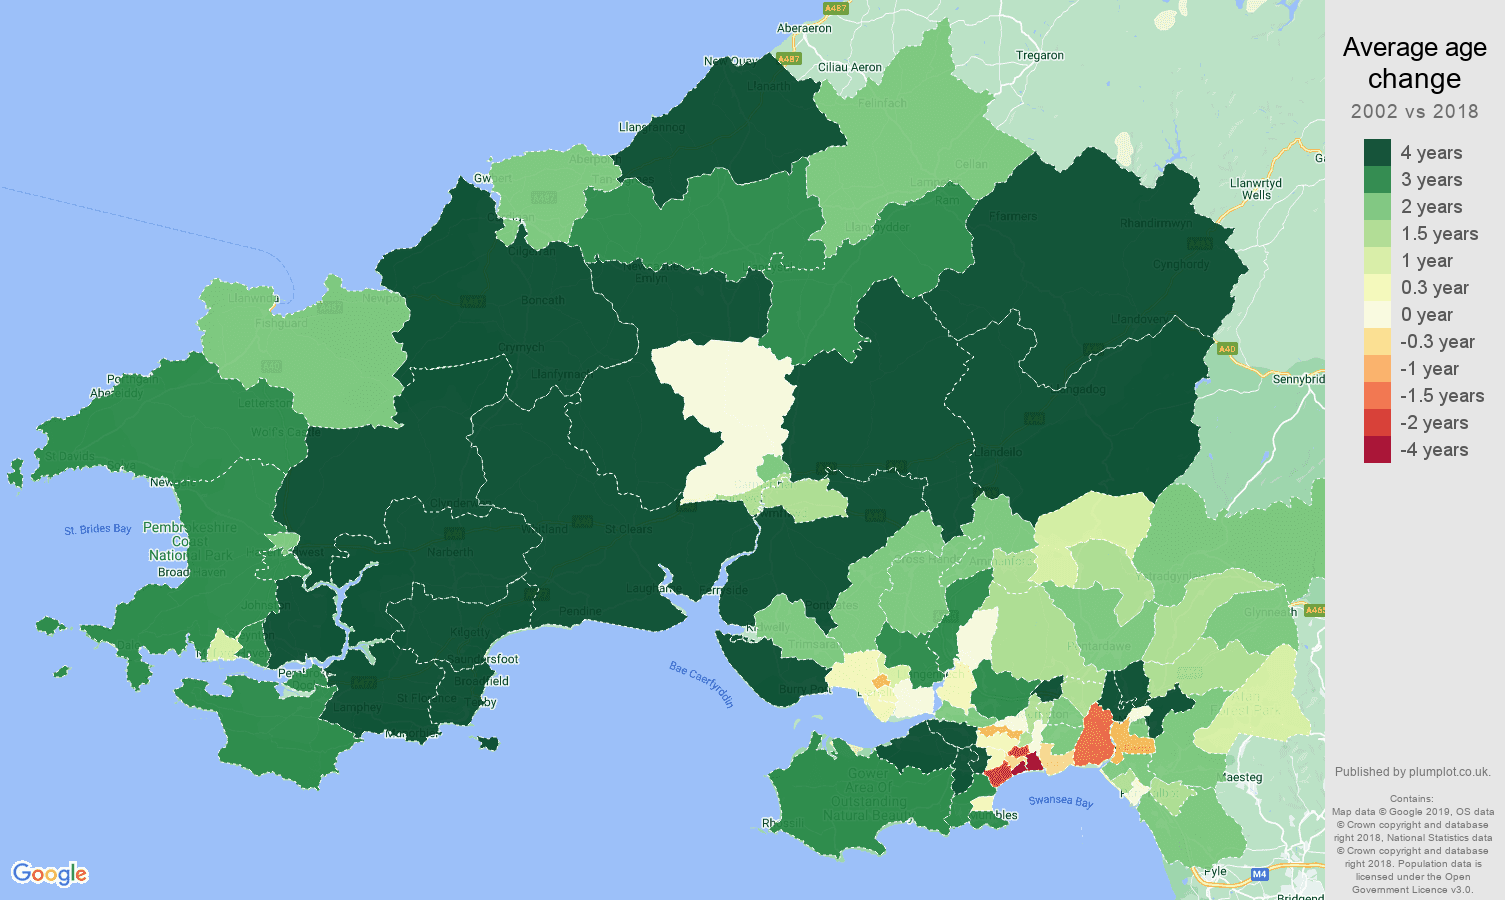 Swansea average age change map